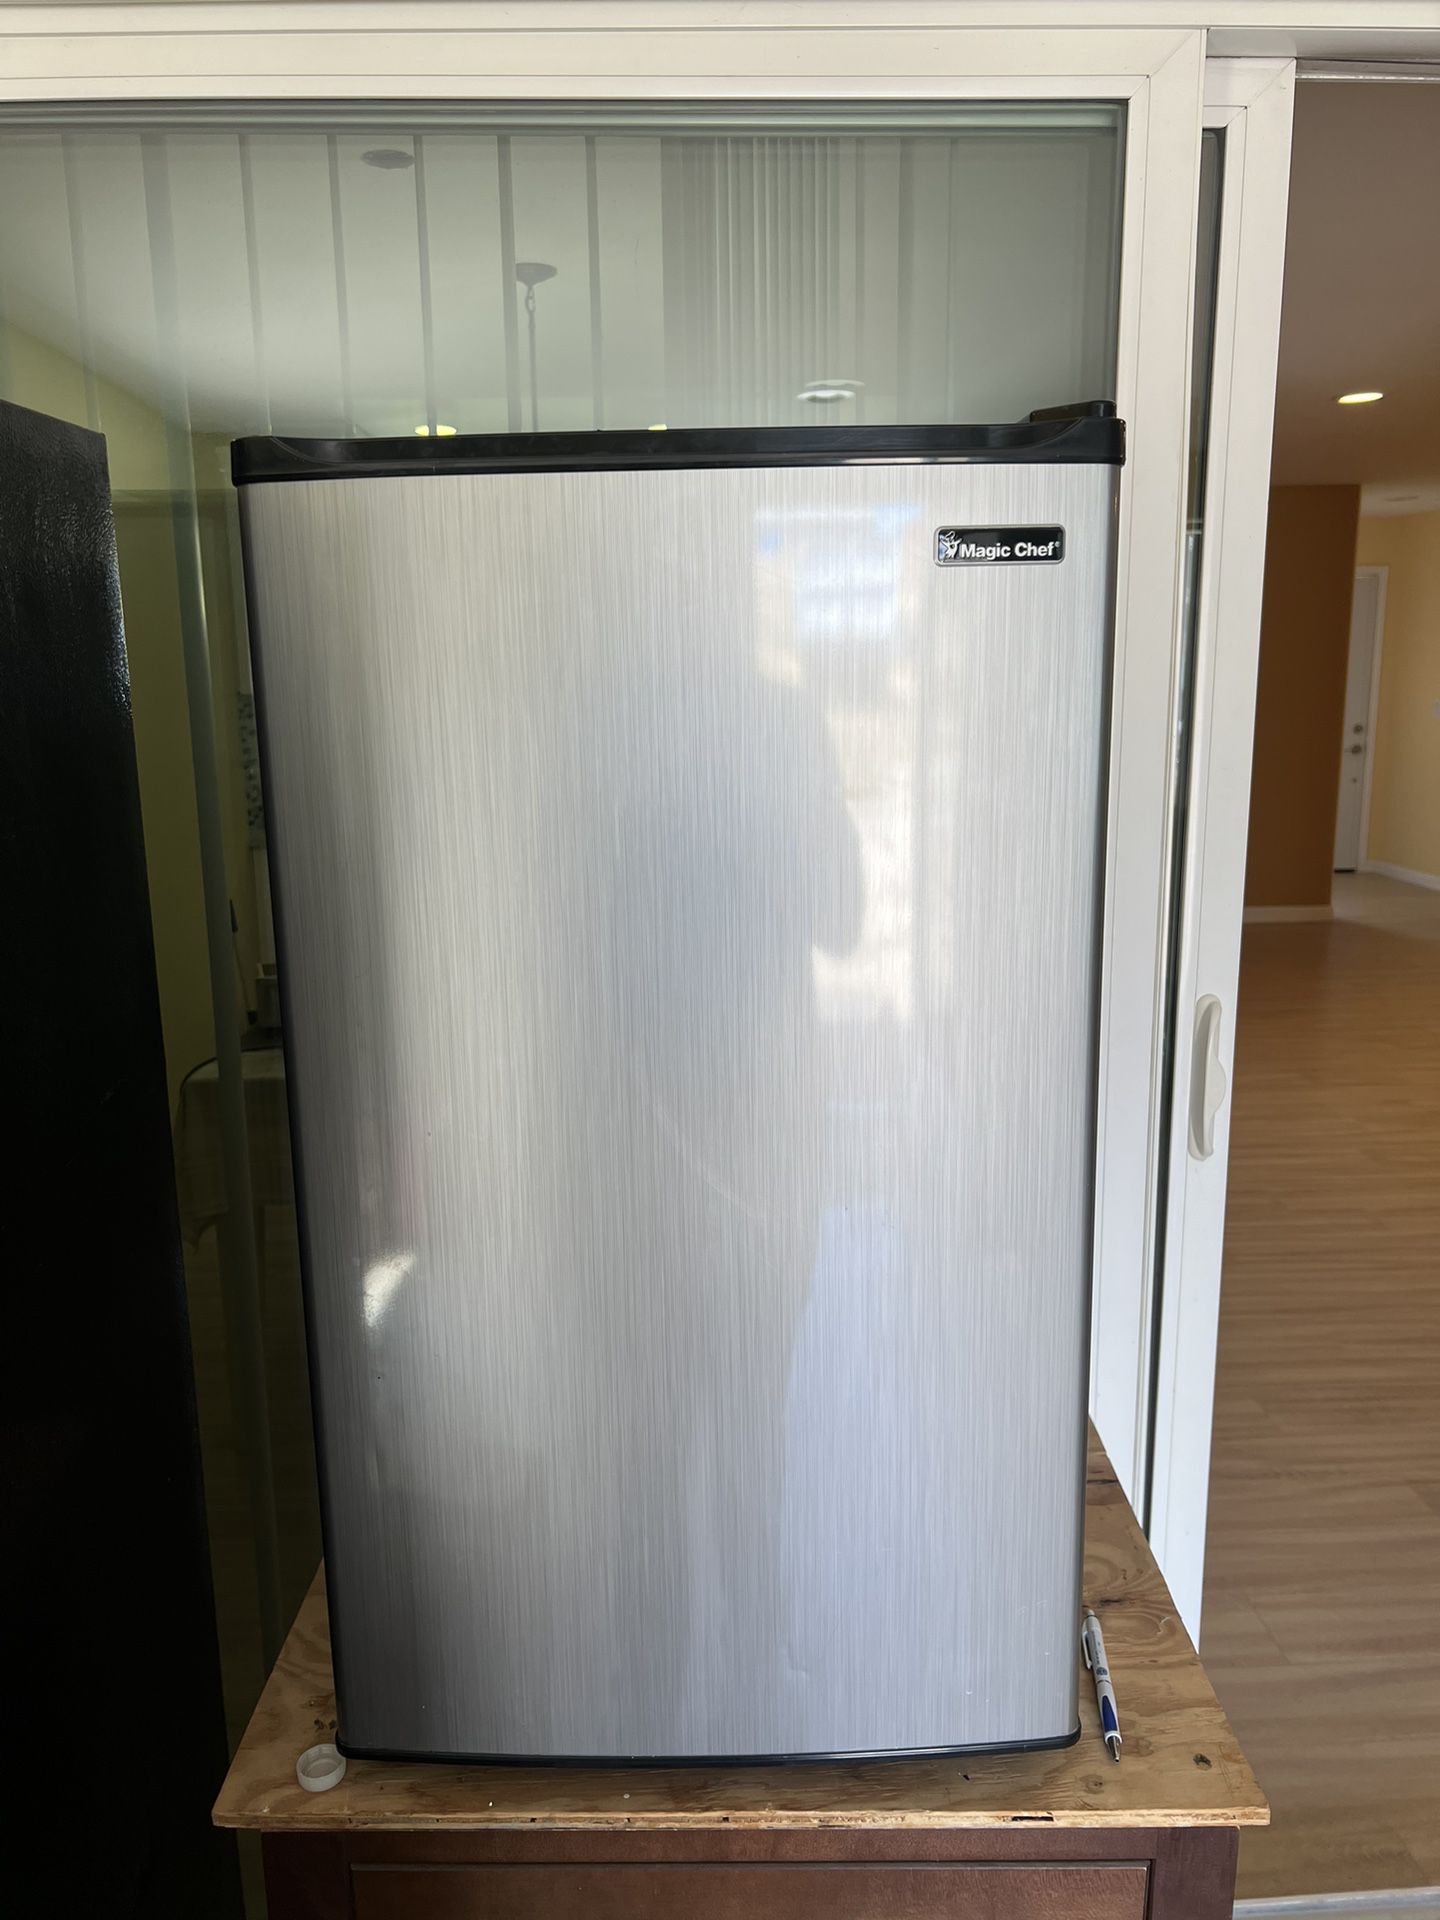 Magic Chef Refrigerator 